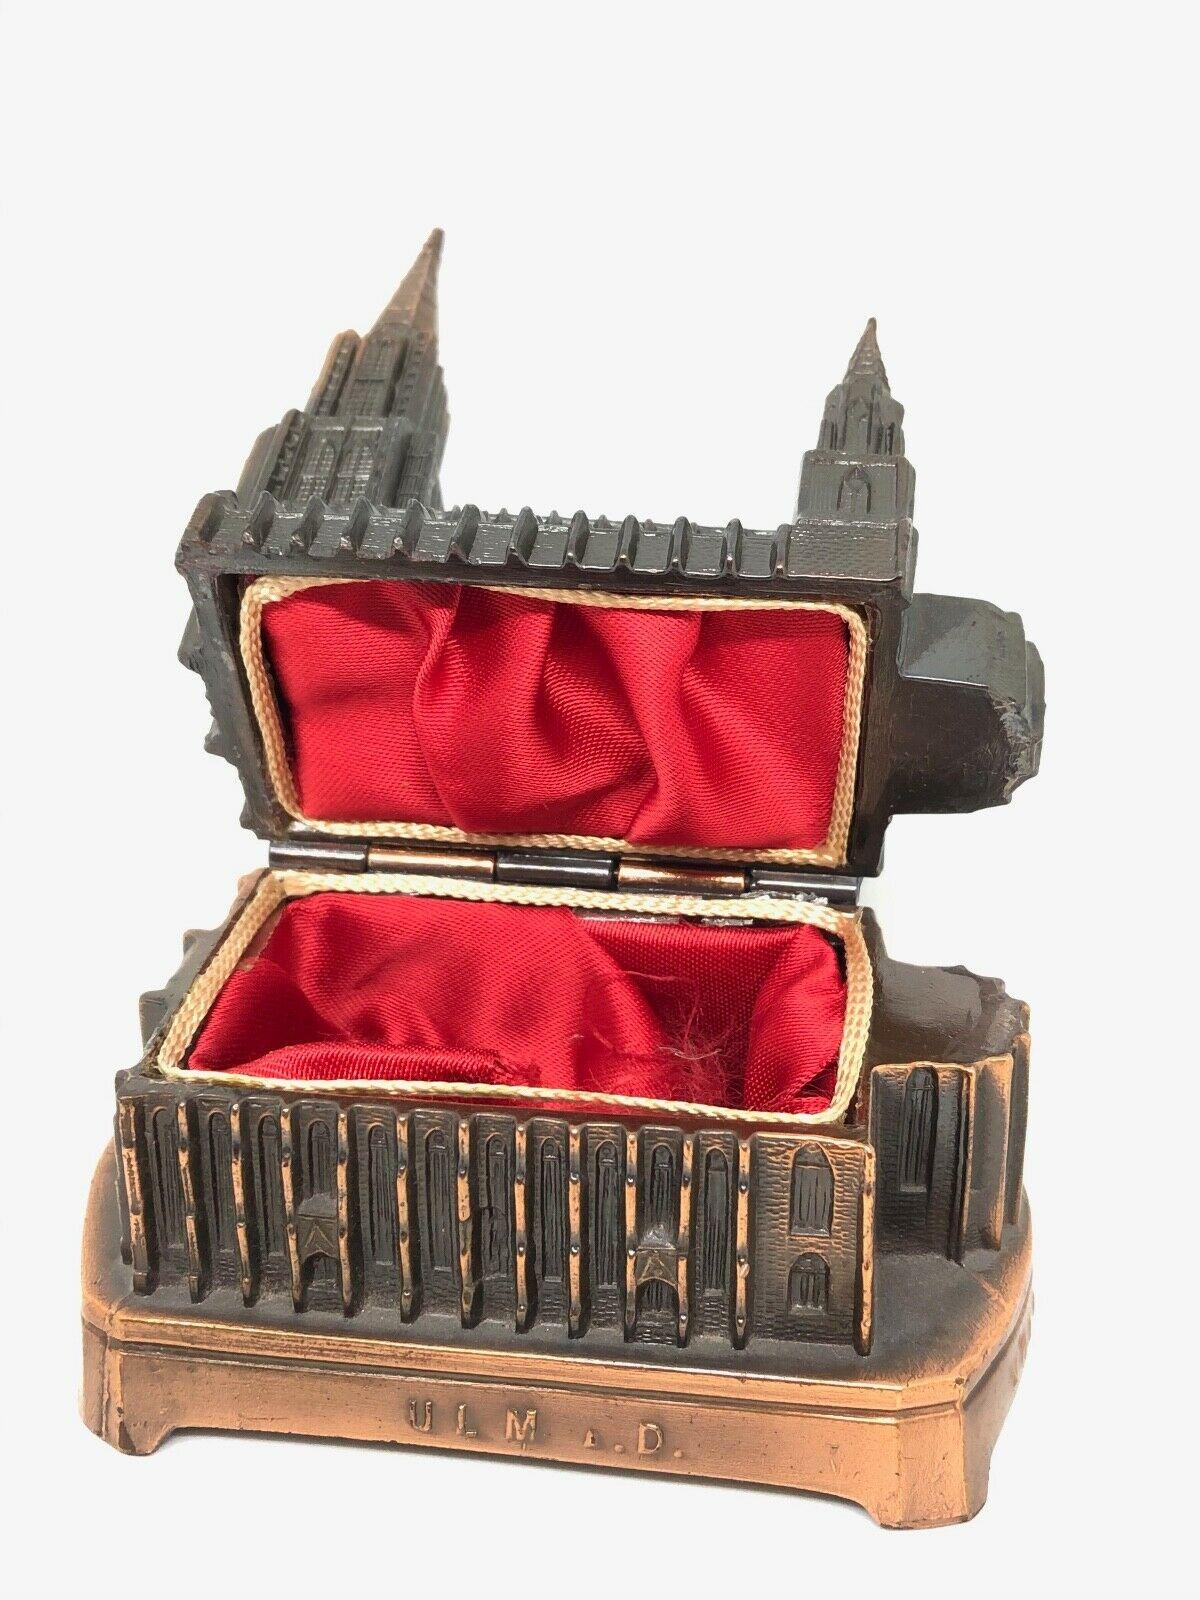 Ulm Minster Church Jewelry Trinket Box Metal, Vintage German Souvenir, 1950s For Sale 1